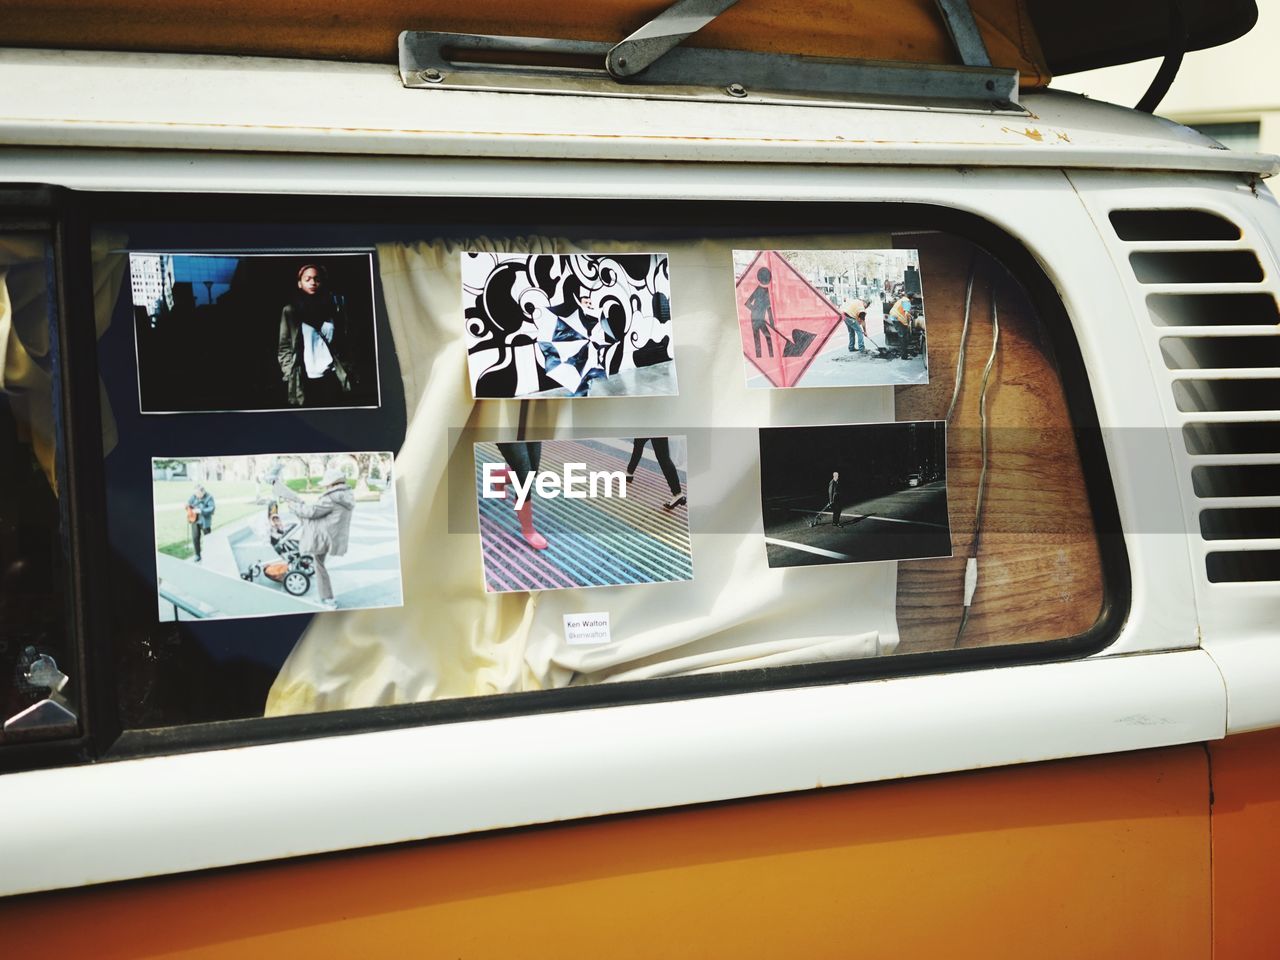 Posters on vehicle window